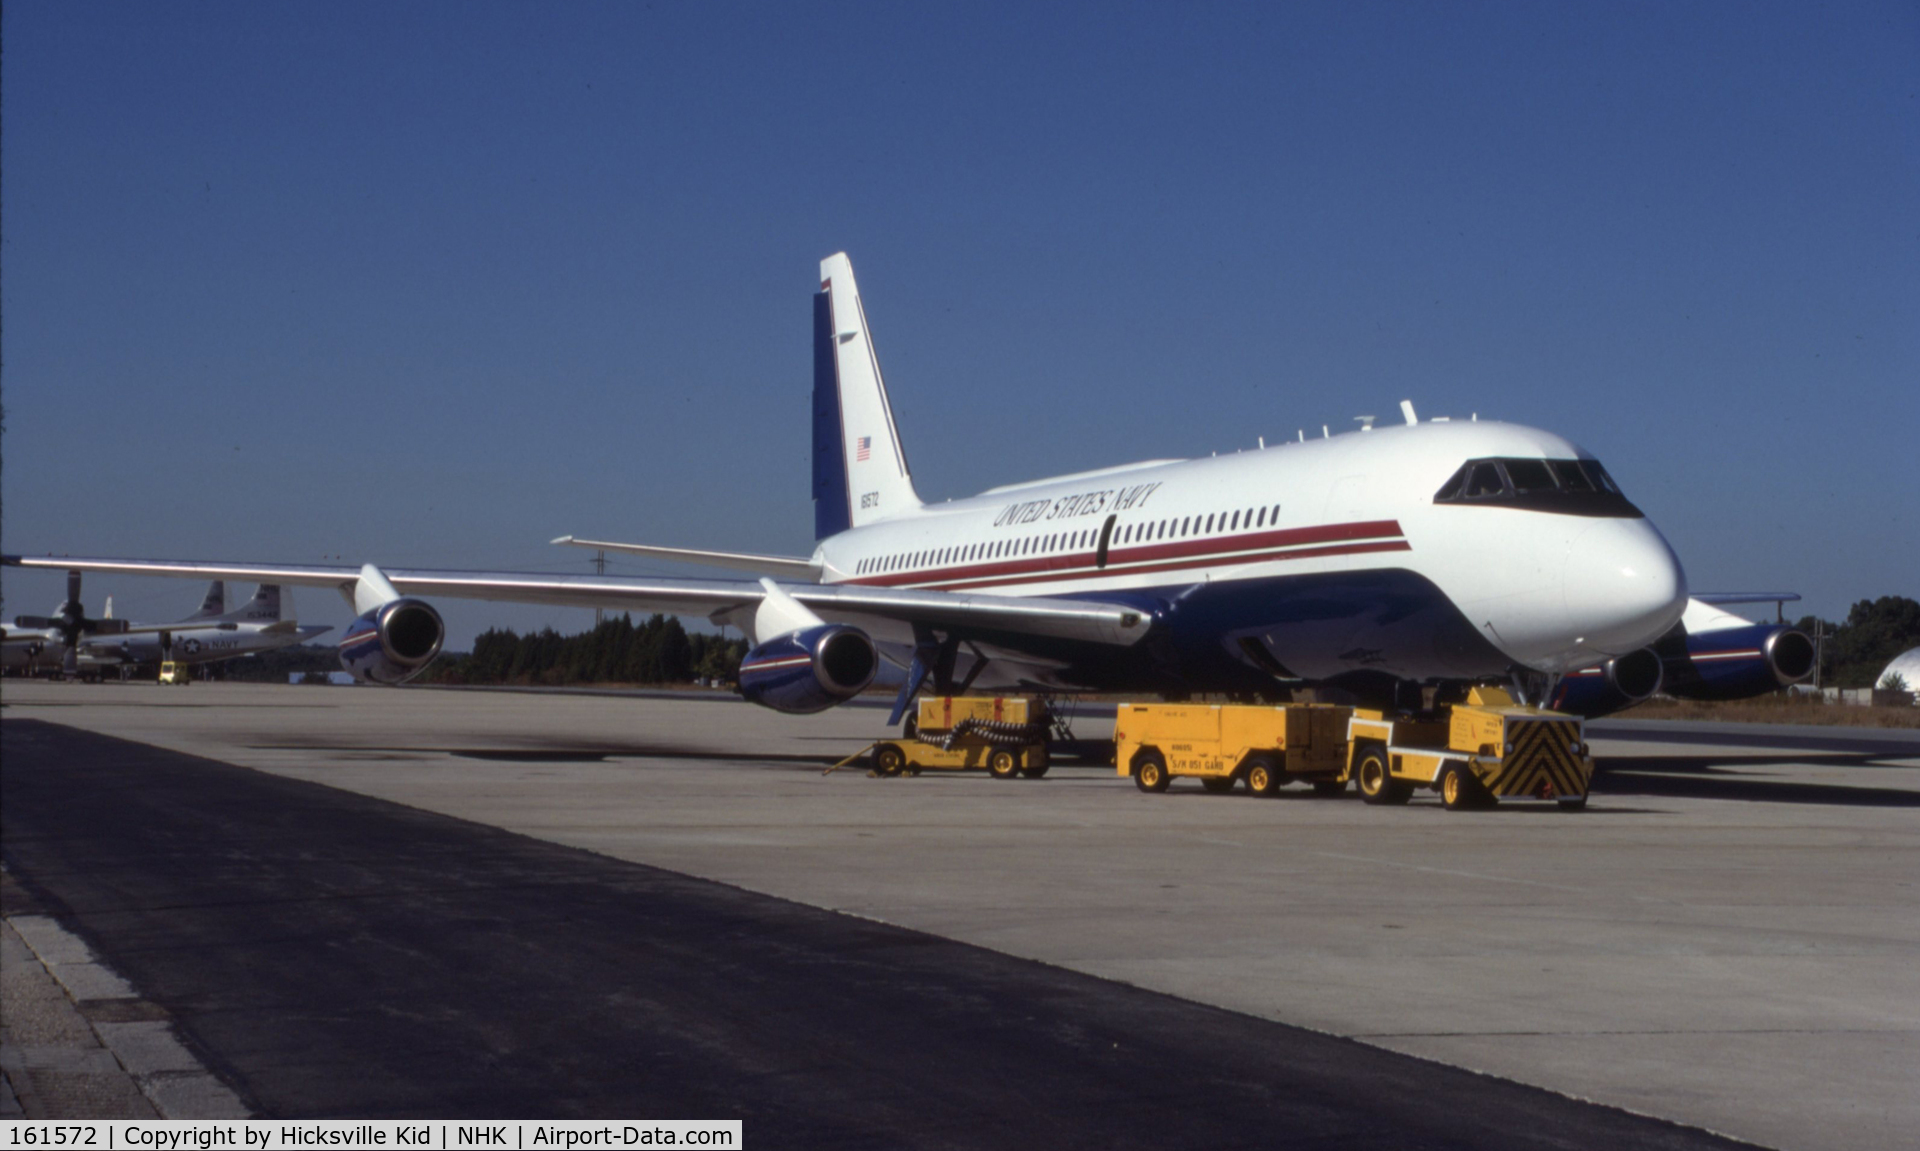 161572, 1961 Convair 880-22M-21 C/N 22-00-55, UC-880 taken at Pax River October 1986.